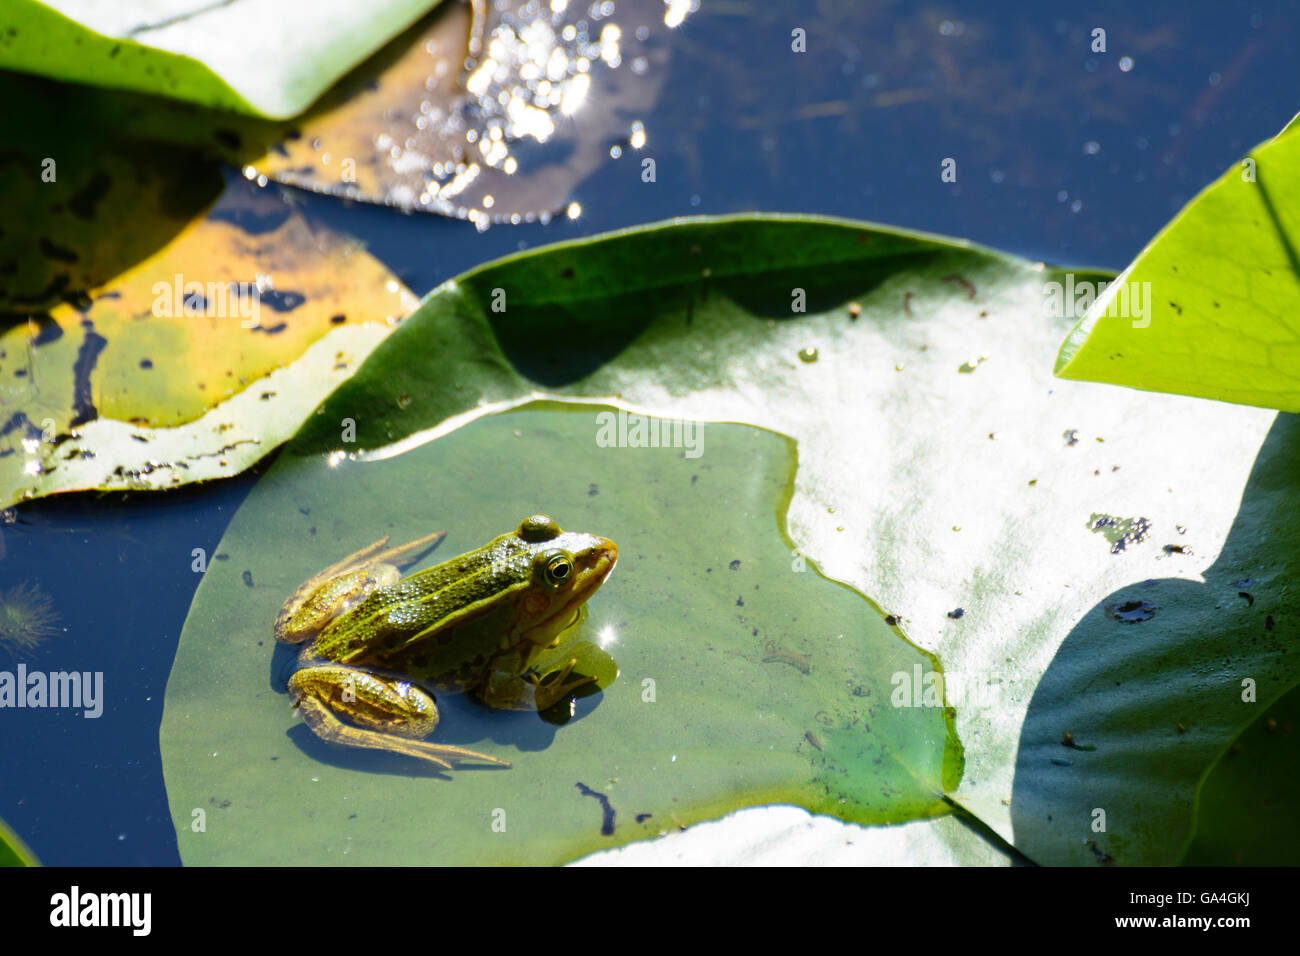 Schrems Pond Frog ( Pelophylax kl . Esculentus Pelophylax ' esculentus ' or Rana ' esculenta ' ) on lily pad in the natural park Stock Photo